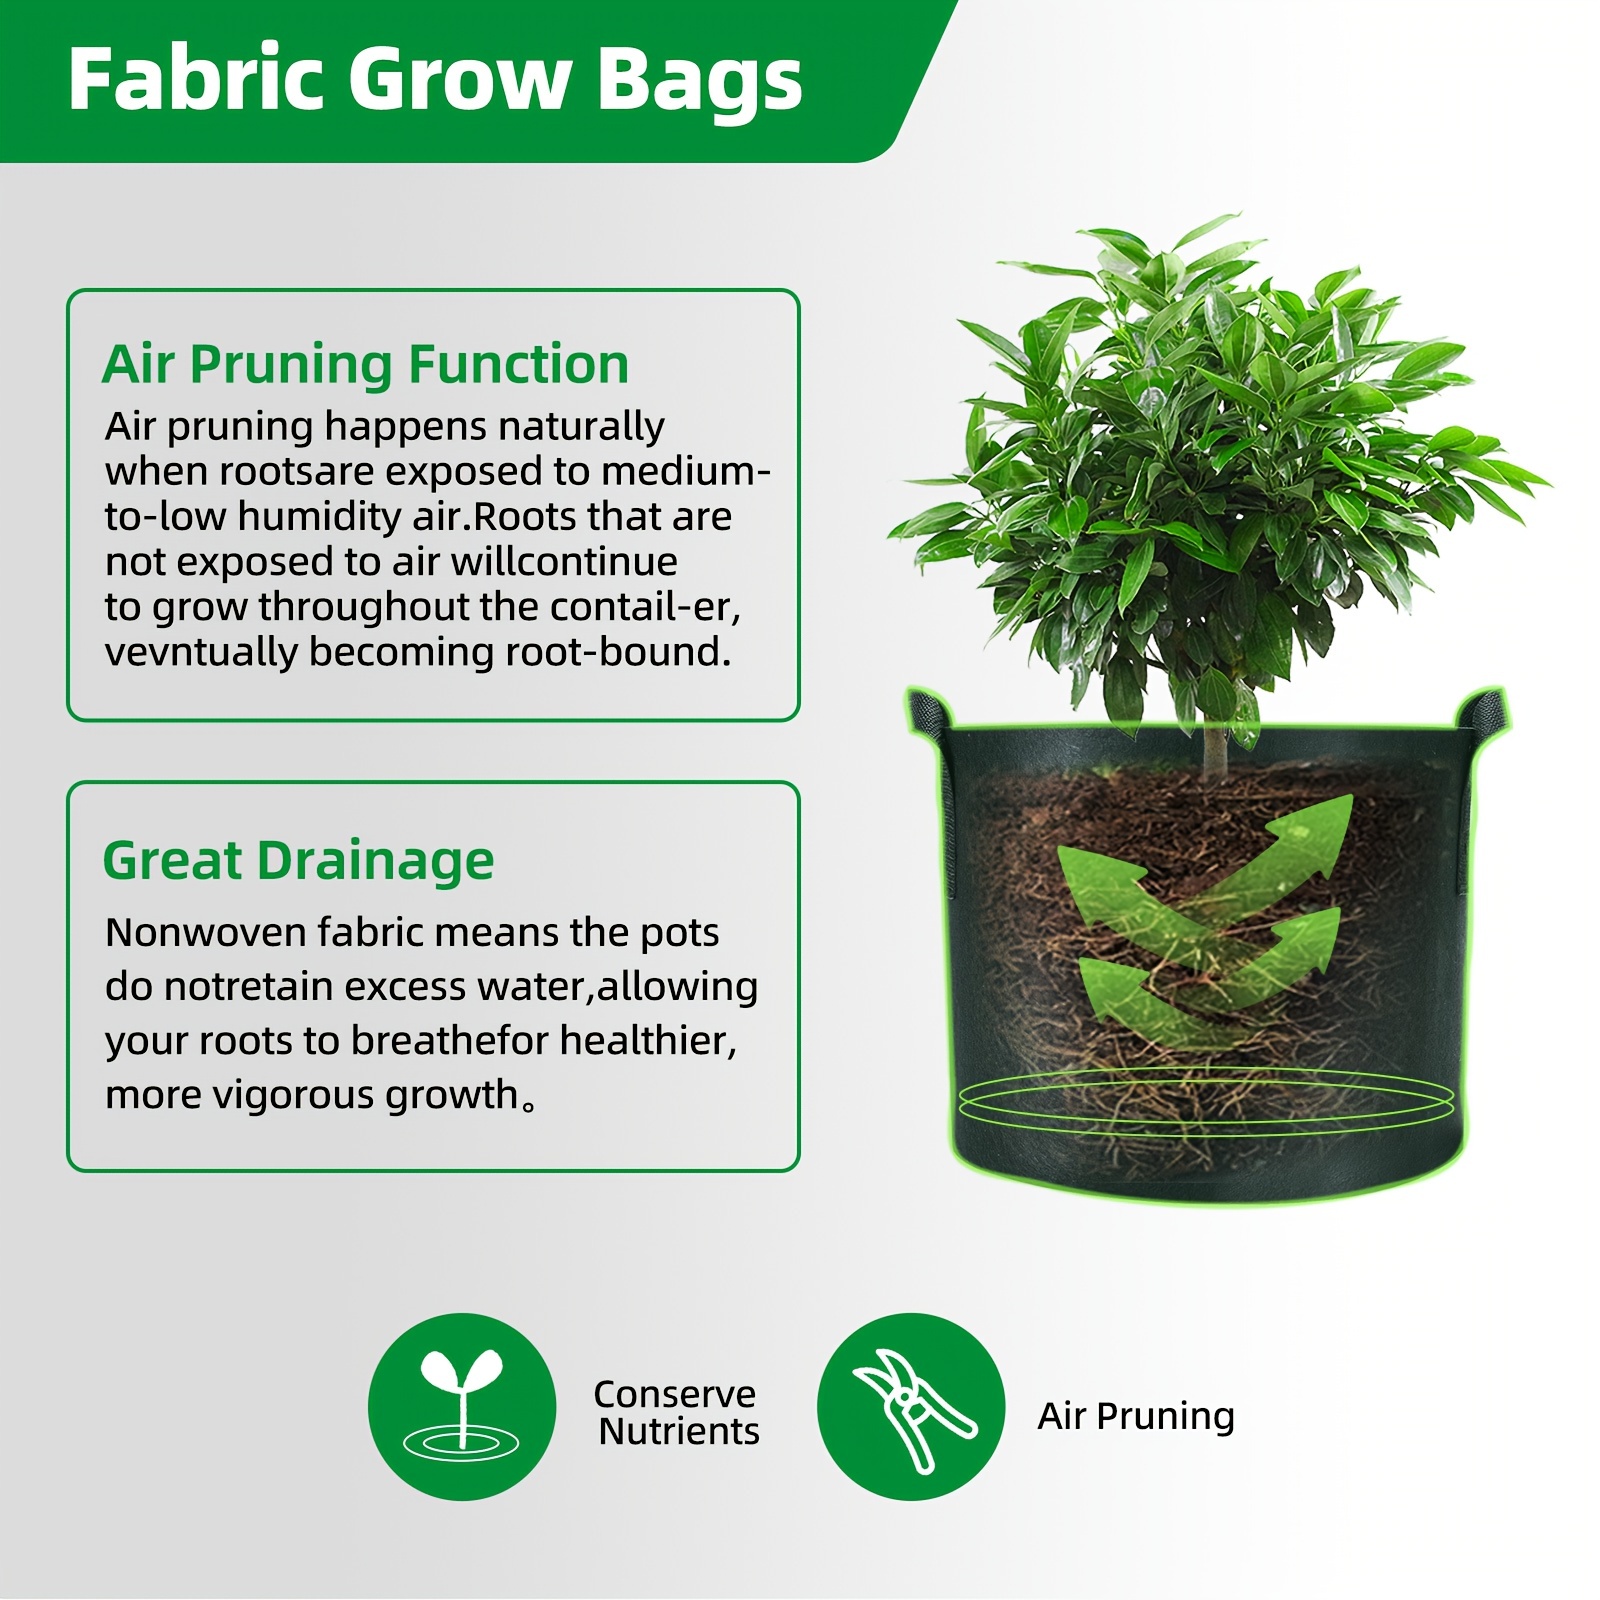 How to Use Your 3 Gallon Plant Grow Bag 